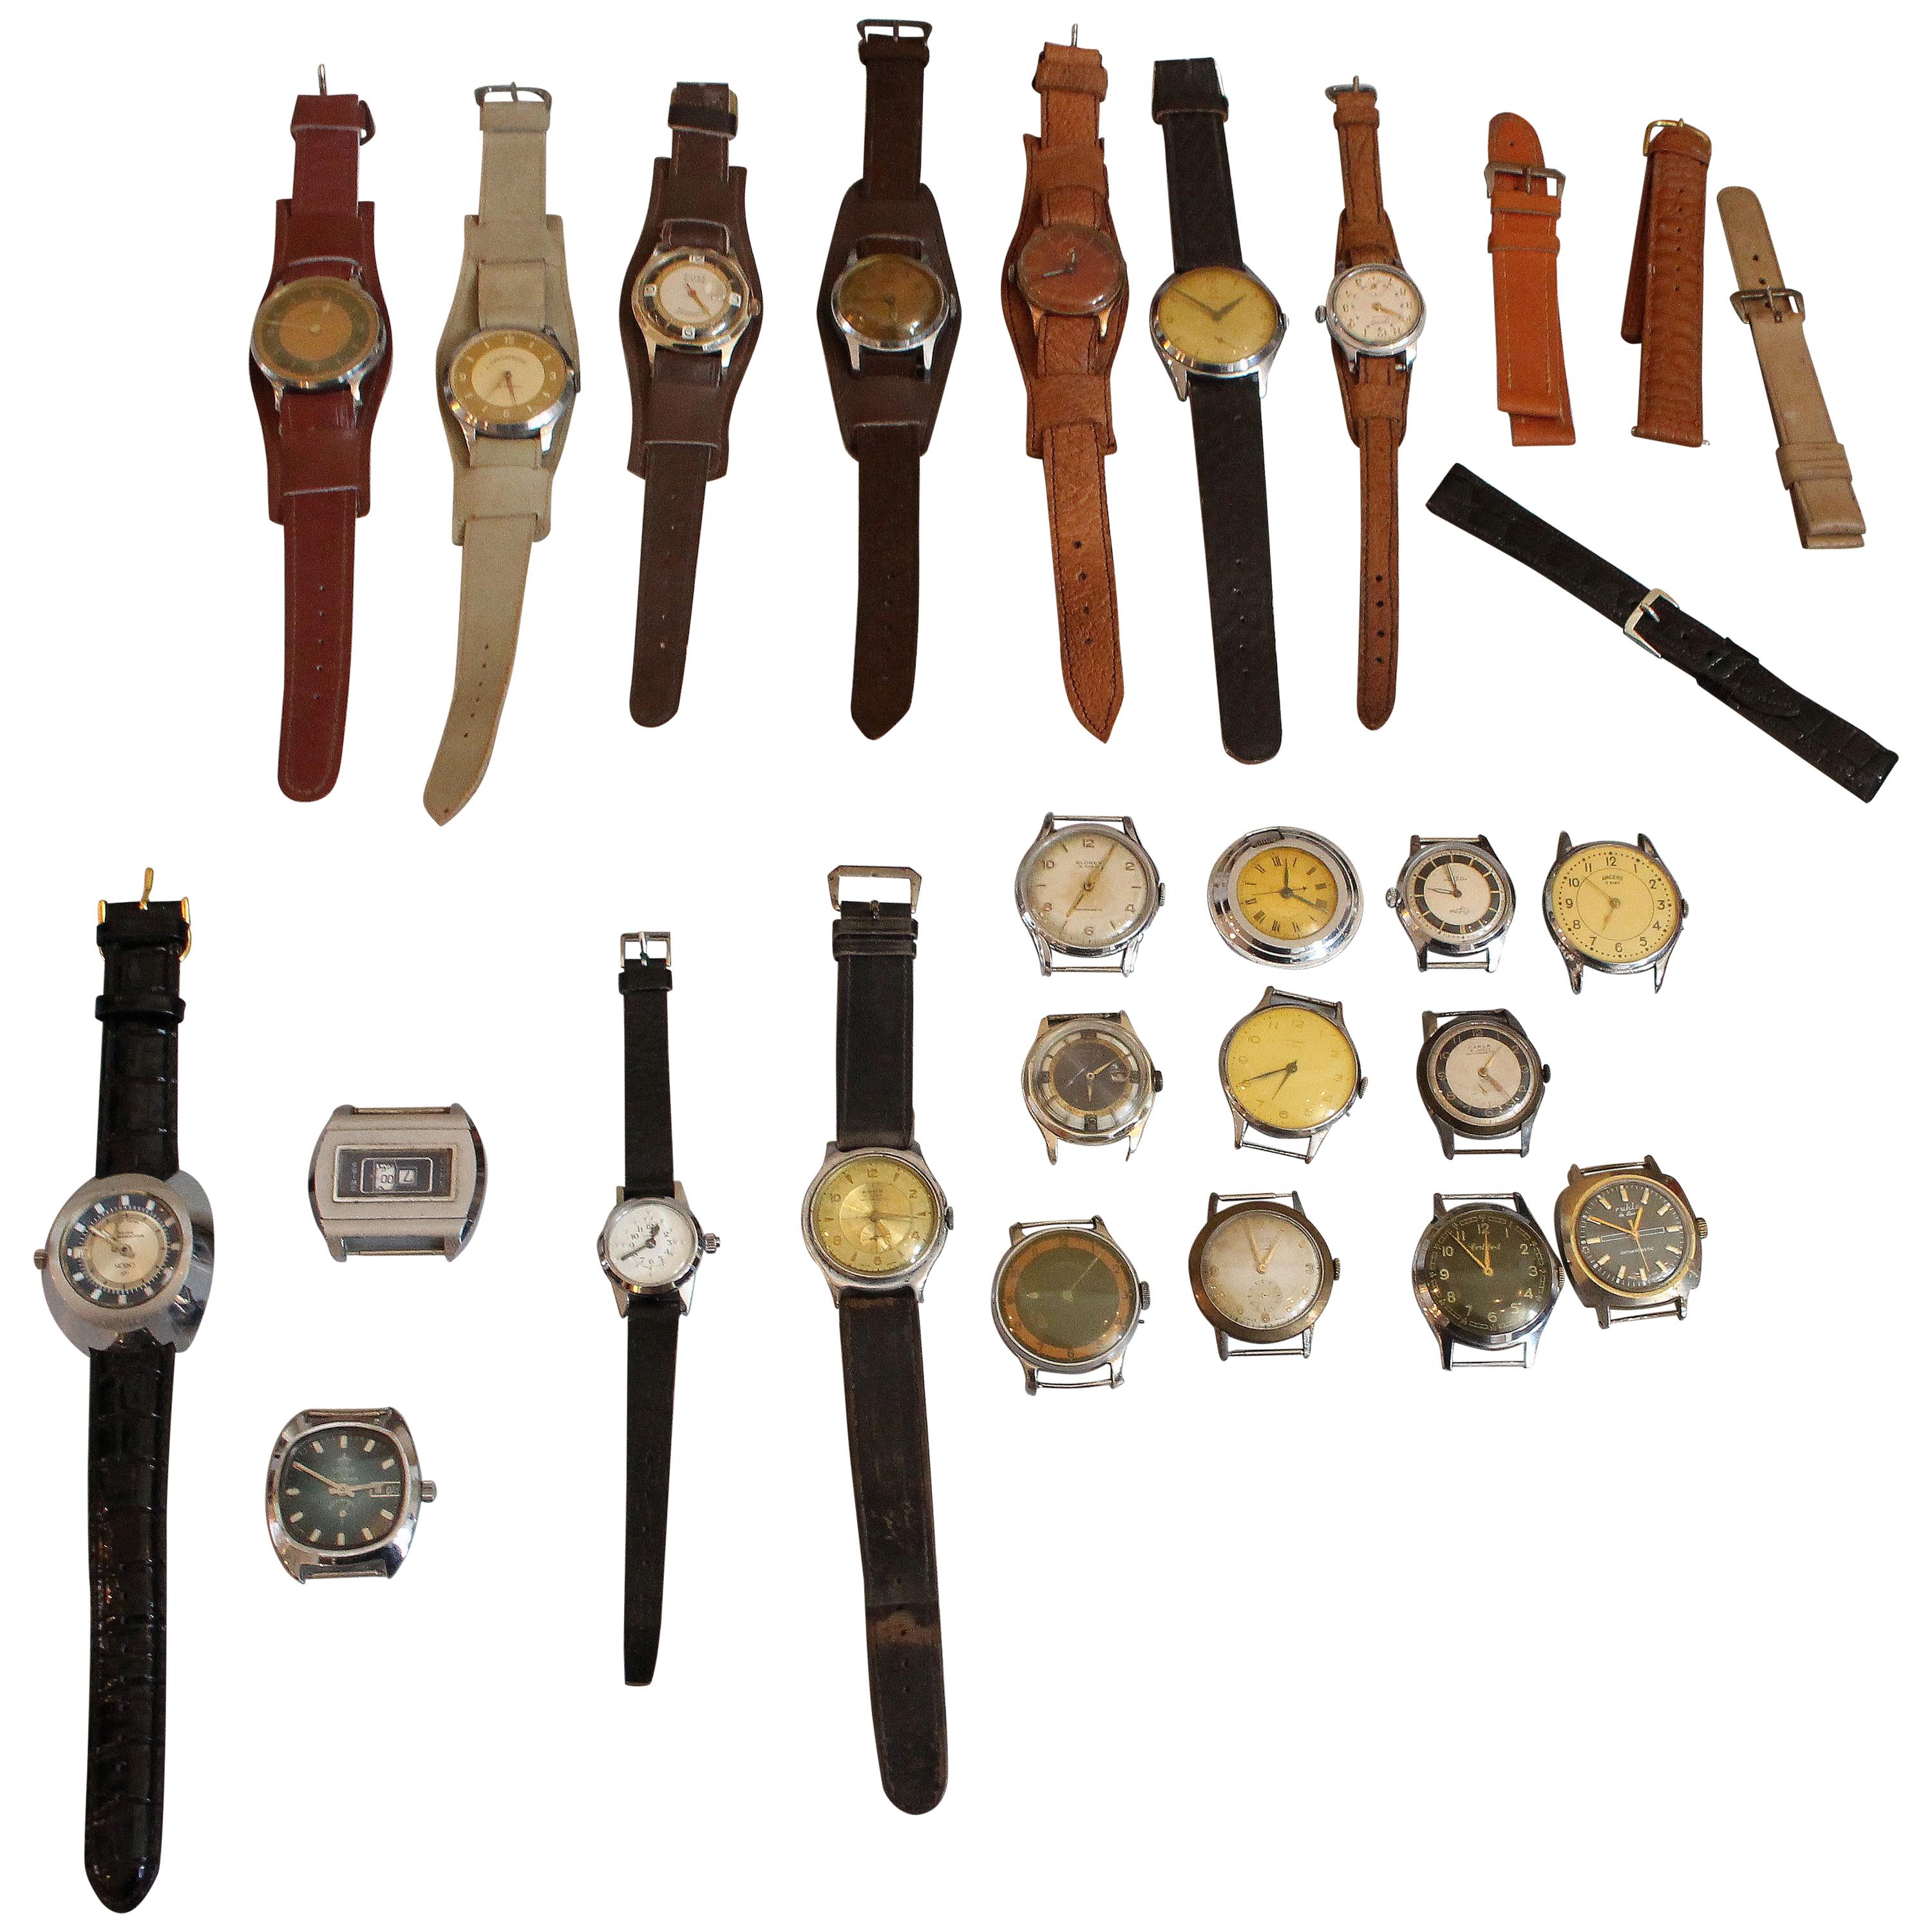 European Vintage Wristwatches Anker, Omega, Orion,  Lanco Swiss, Chronometre For Sale